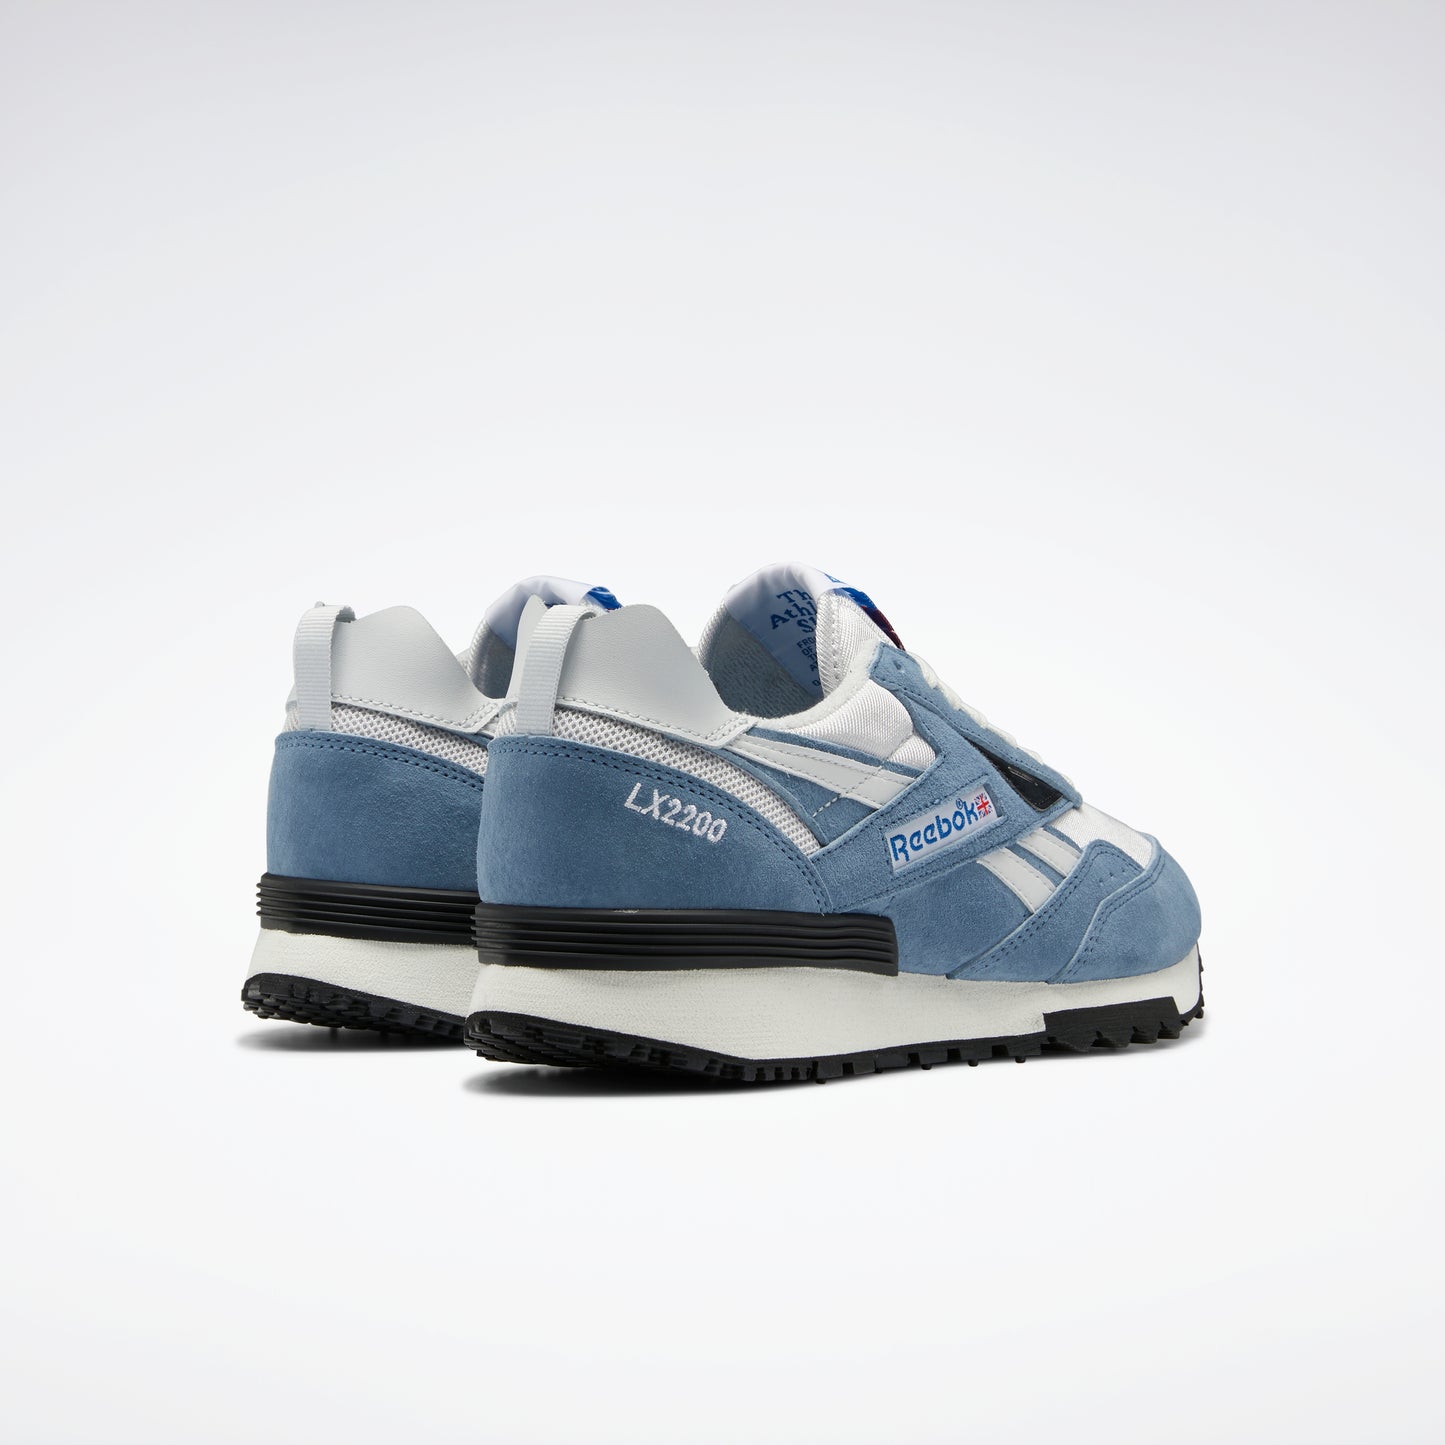 Reebok Footwear Men Lx2200 Shoes Blusla/Clgry1/Cblack